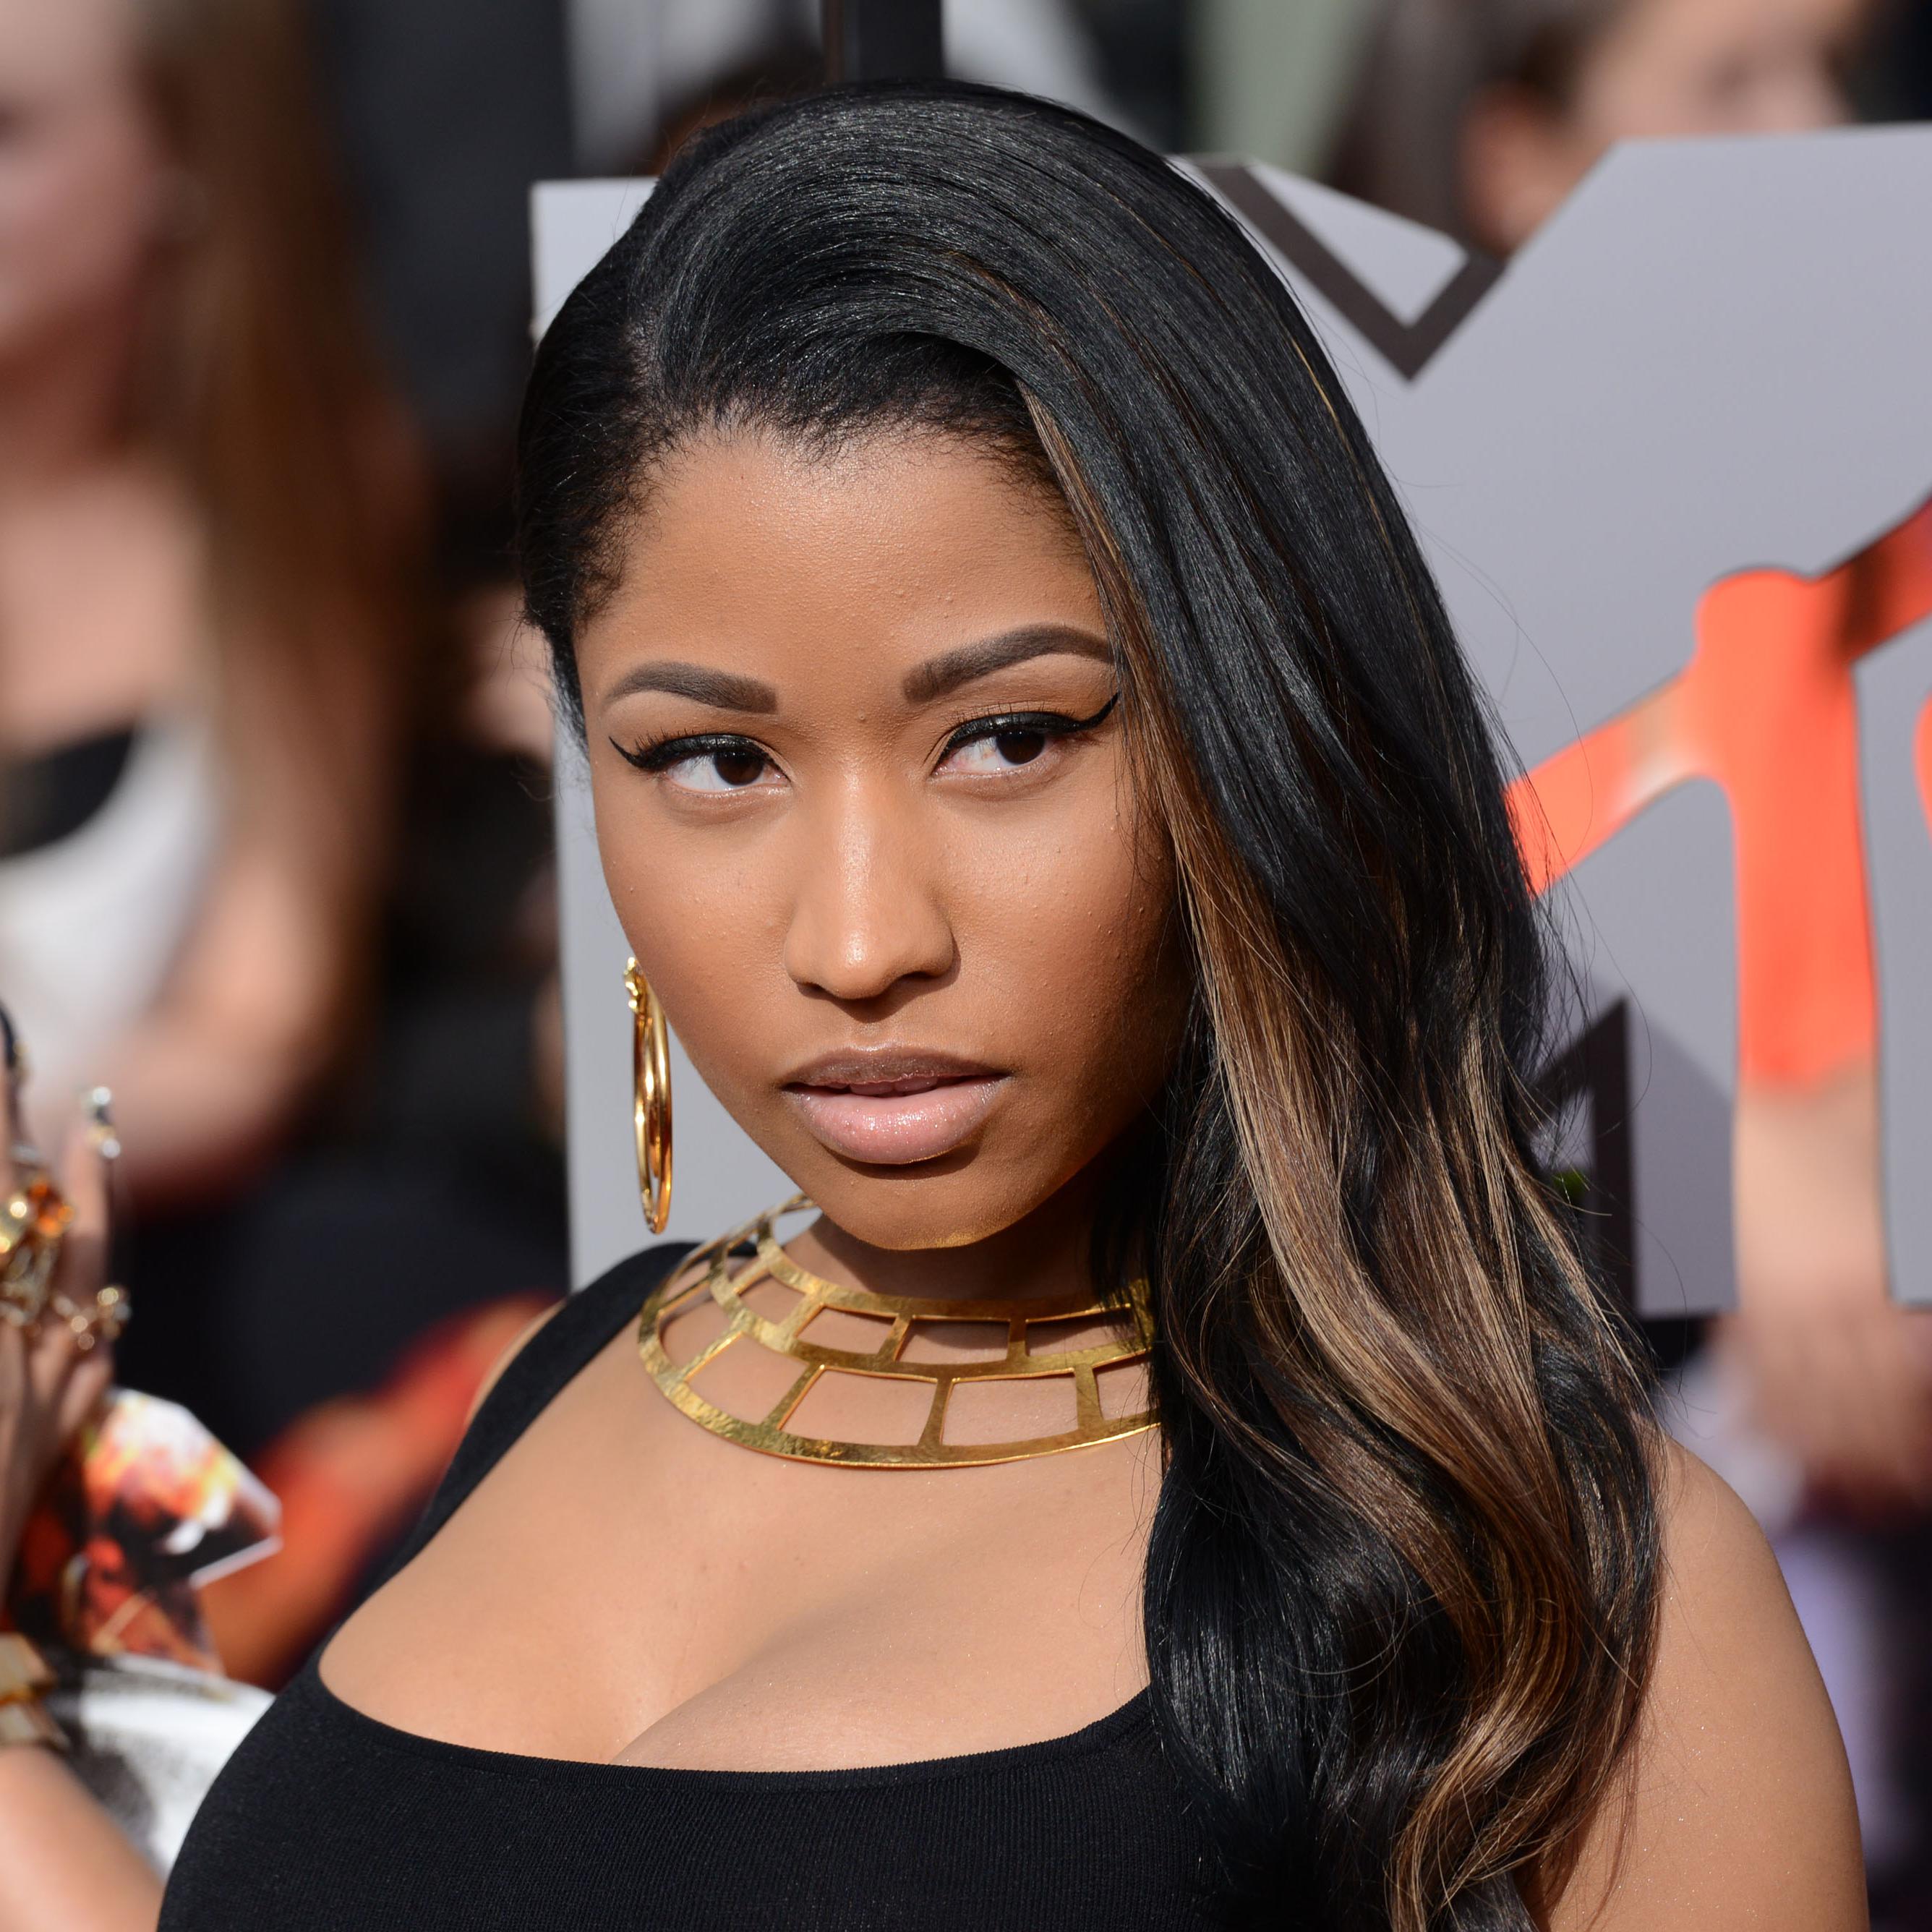 Nicki Minaj aux BET Awards 2014 : « J’ai failli mourir » - Elle